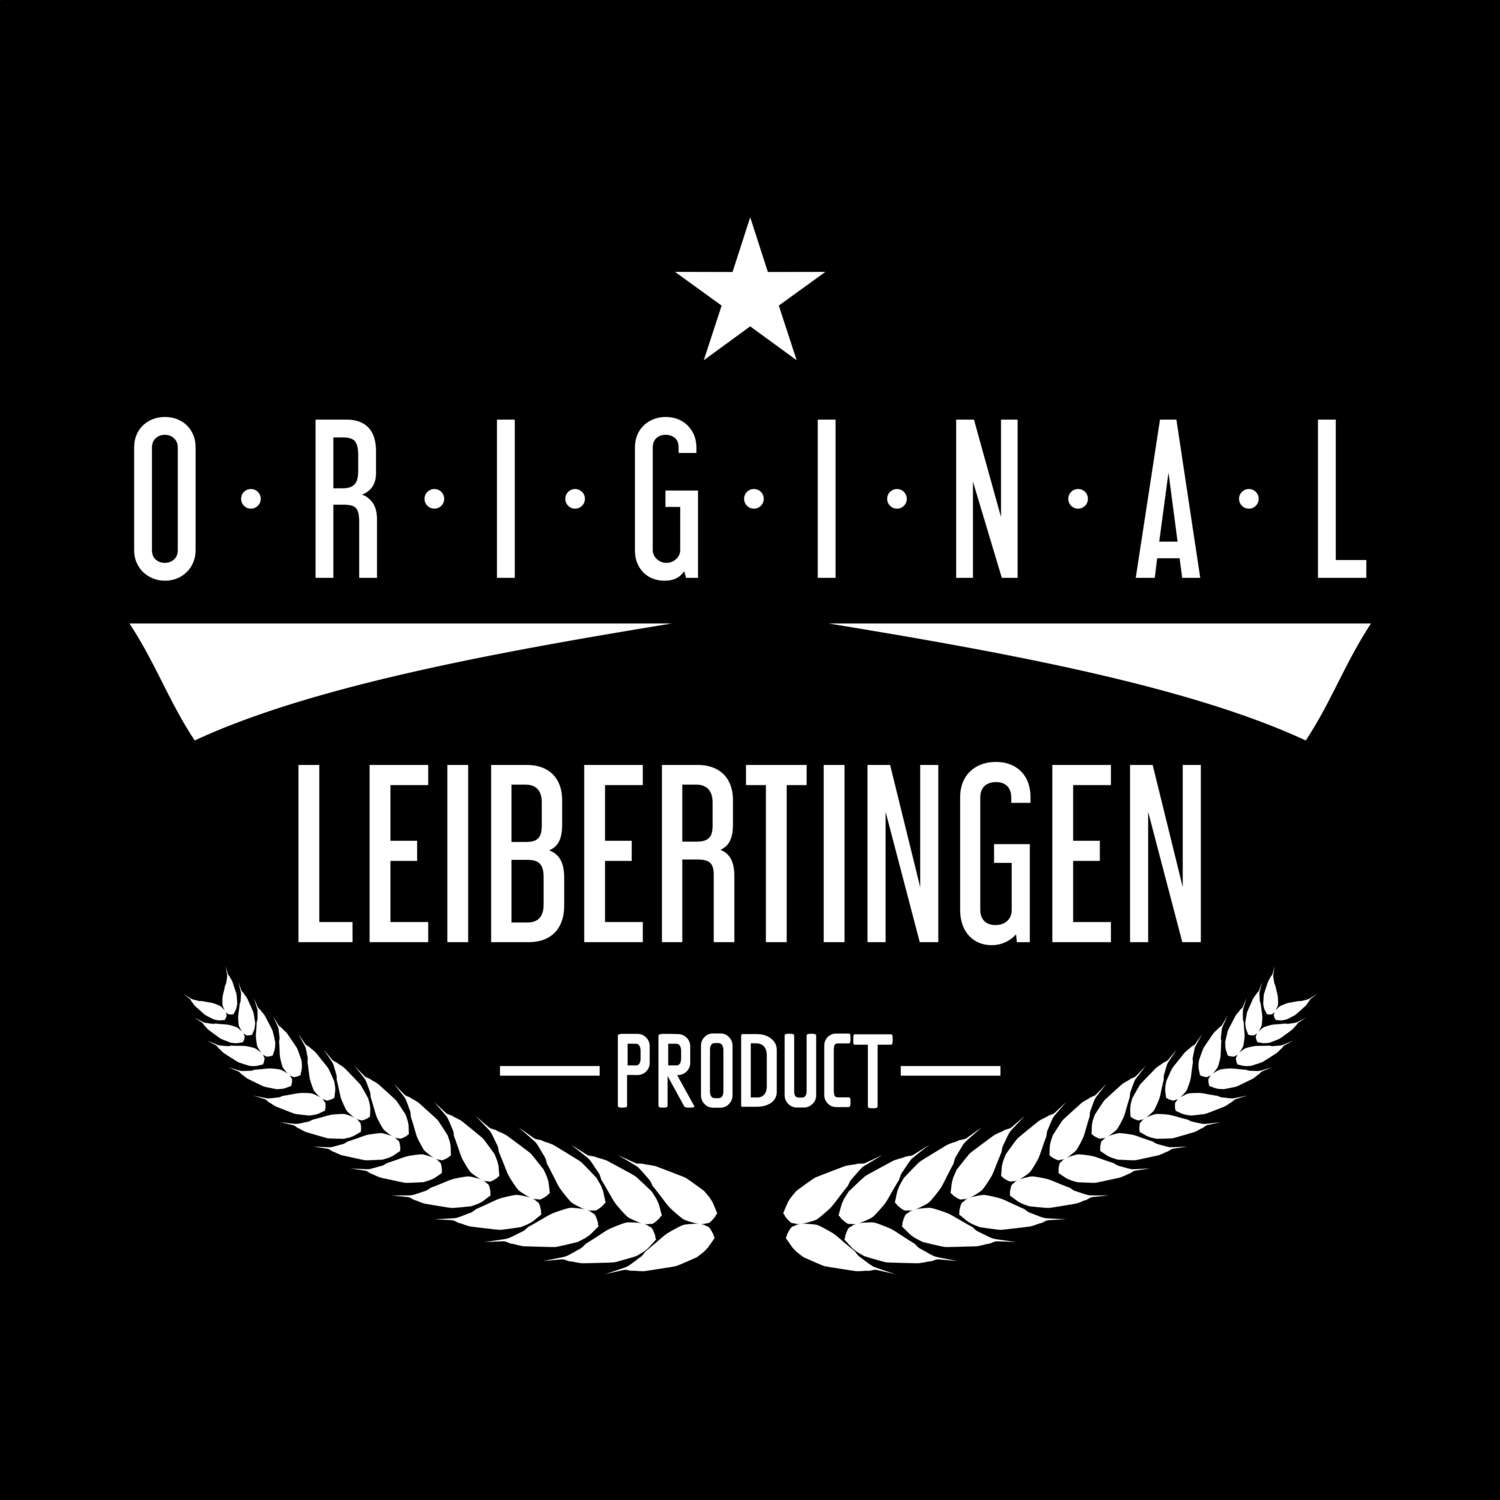 Leibertingen T-Shirt »Original Product«